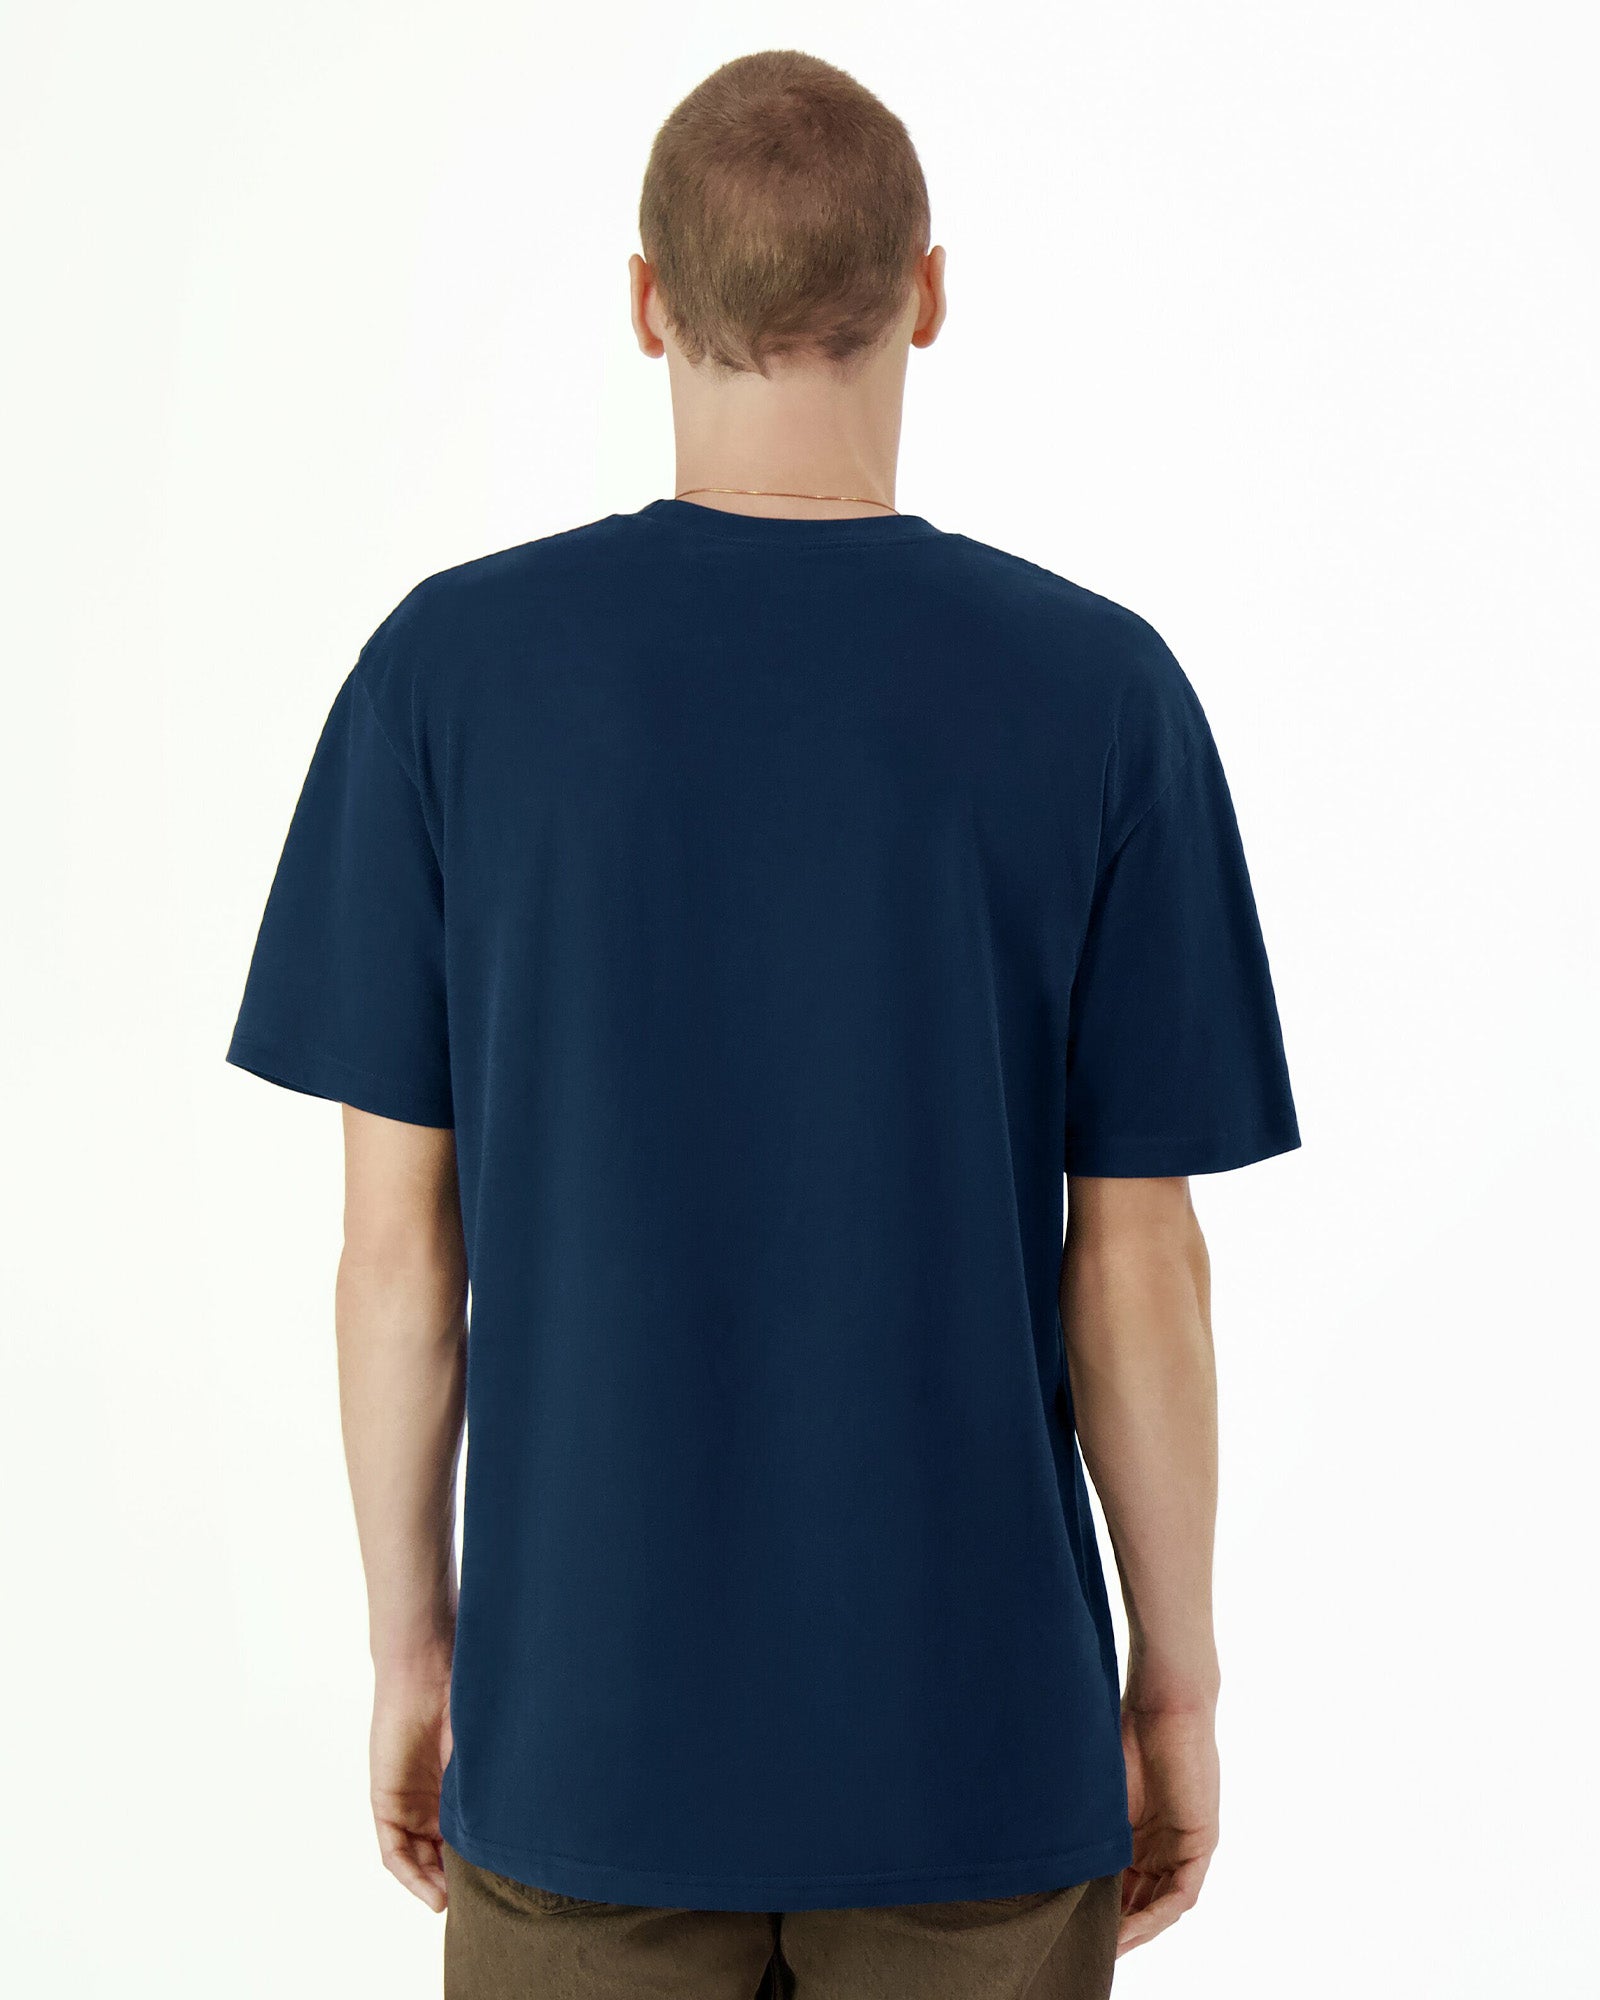 Sueded Unisex Short Sleeve T-shirt